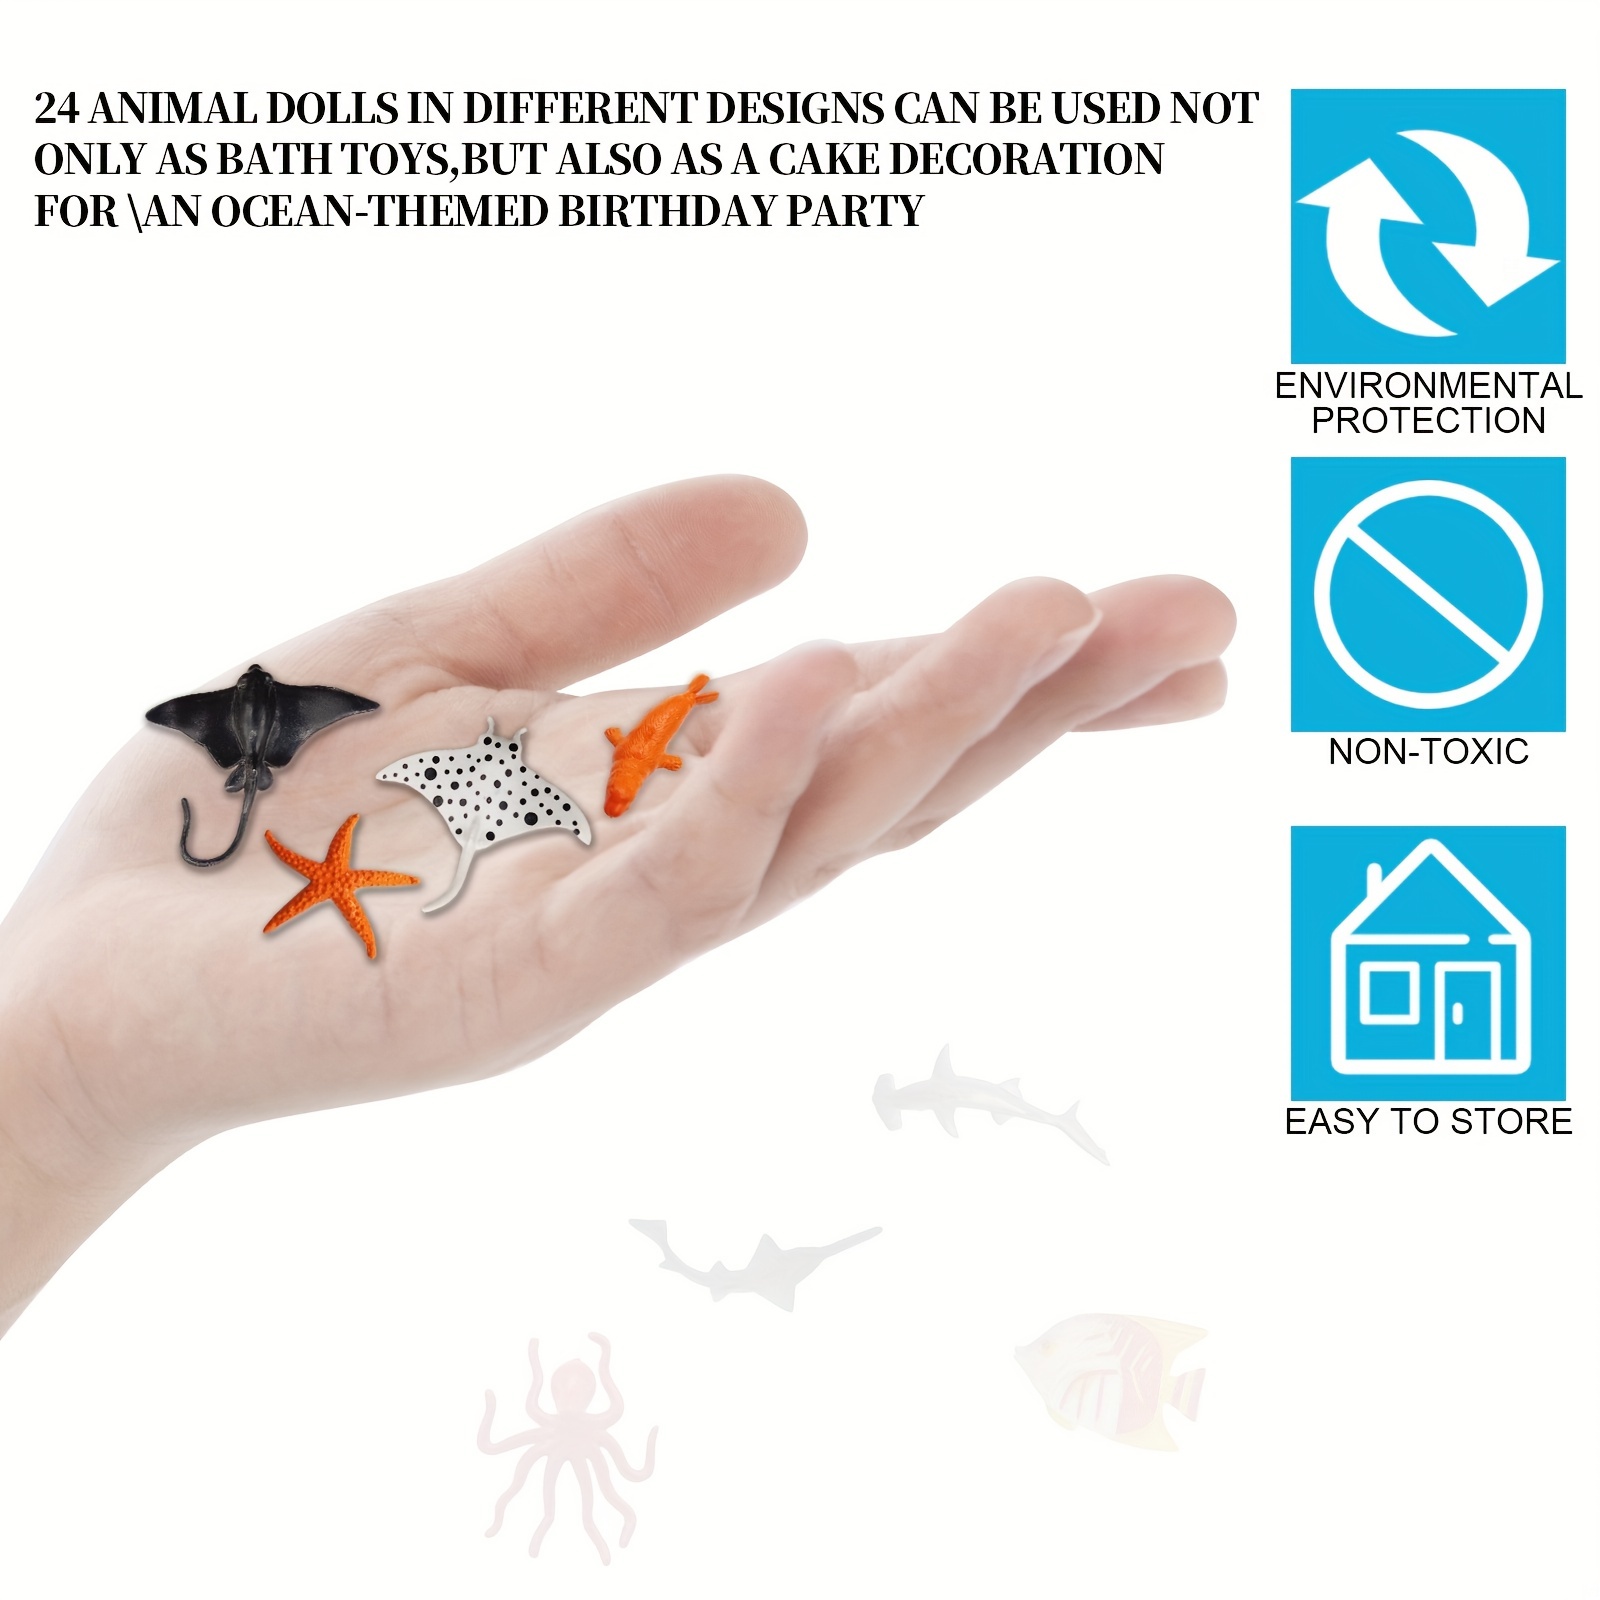 16 PCS Ocean Sea Animal Figures,Mini Sea Life Creatures Toys